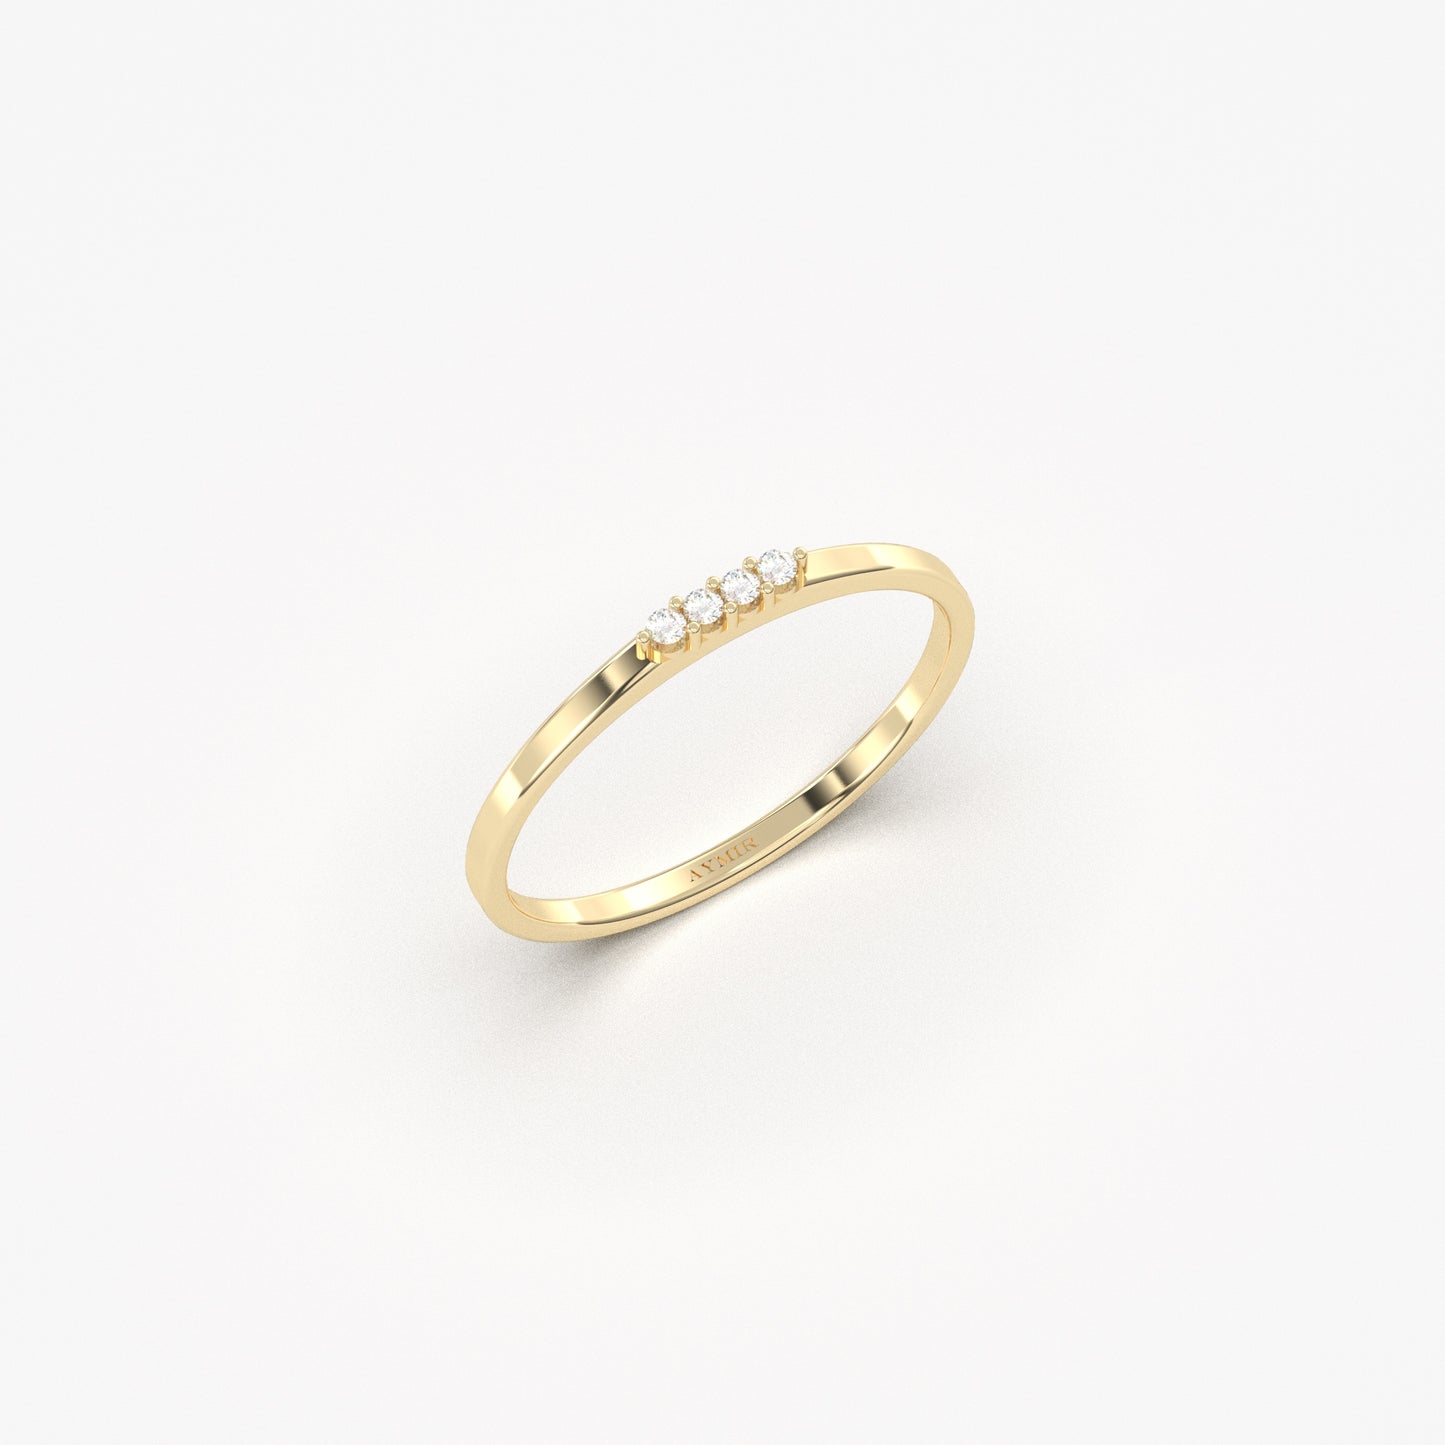 10K Delicate 4 Stone Gold Ring - 2S191